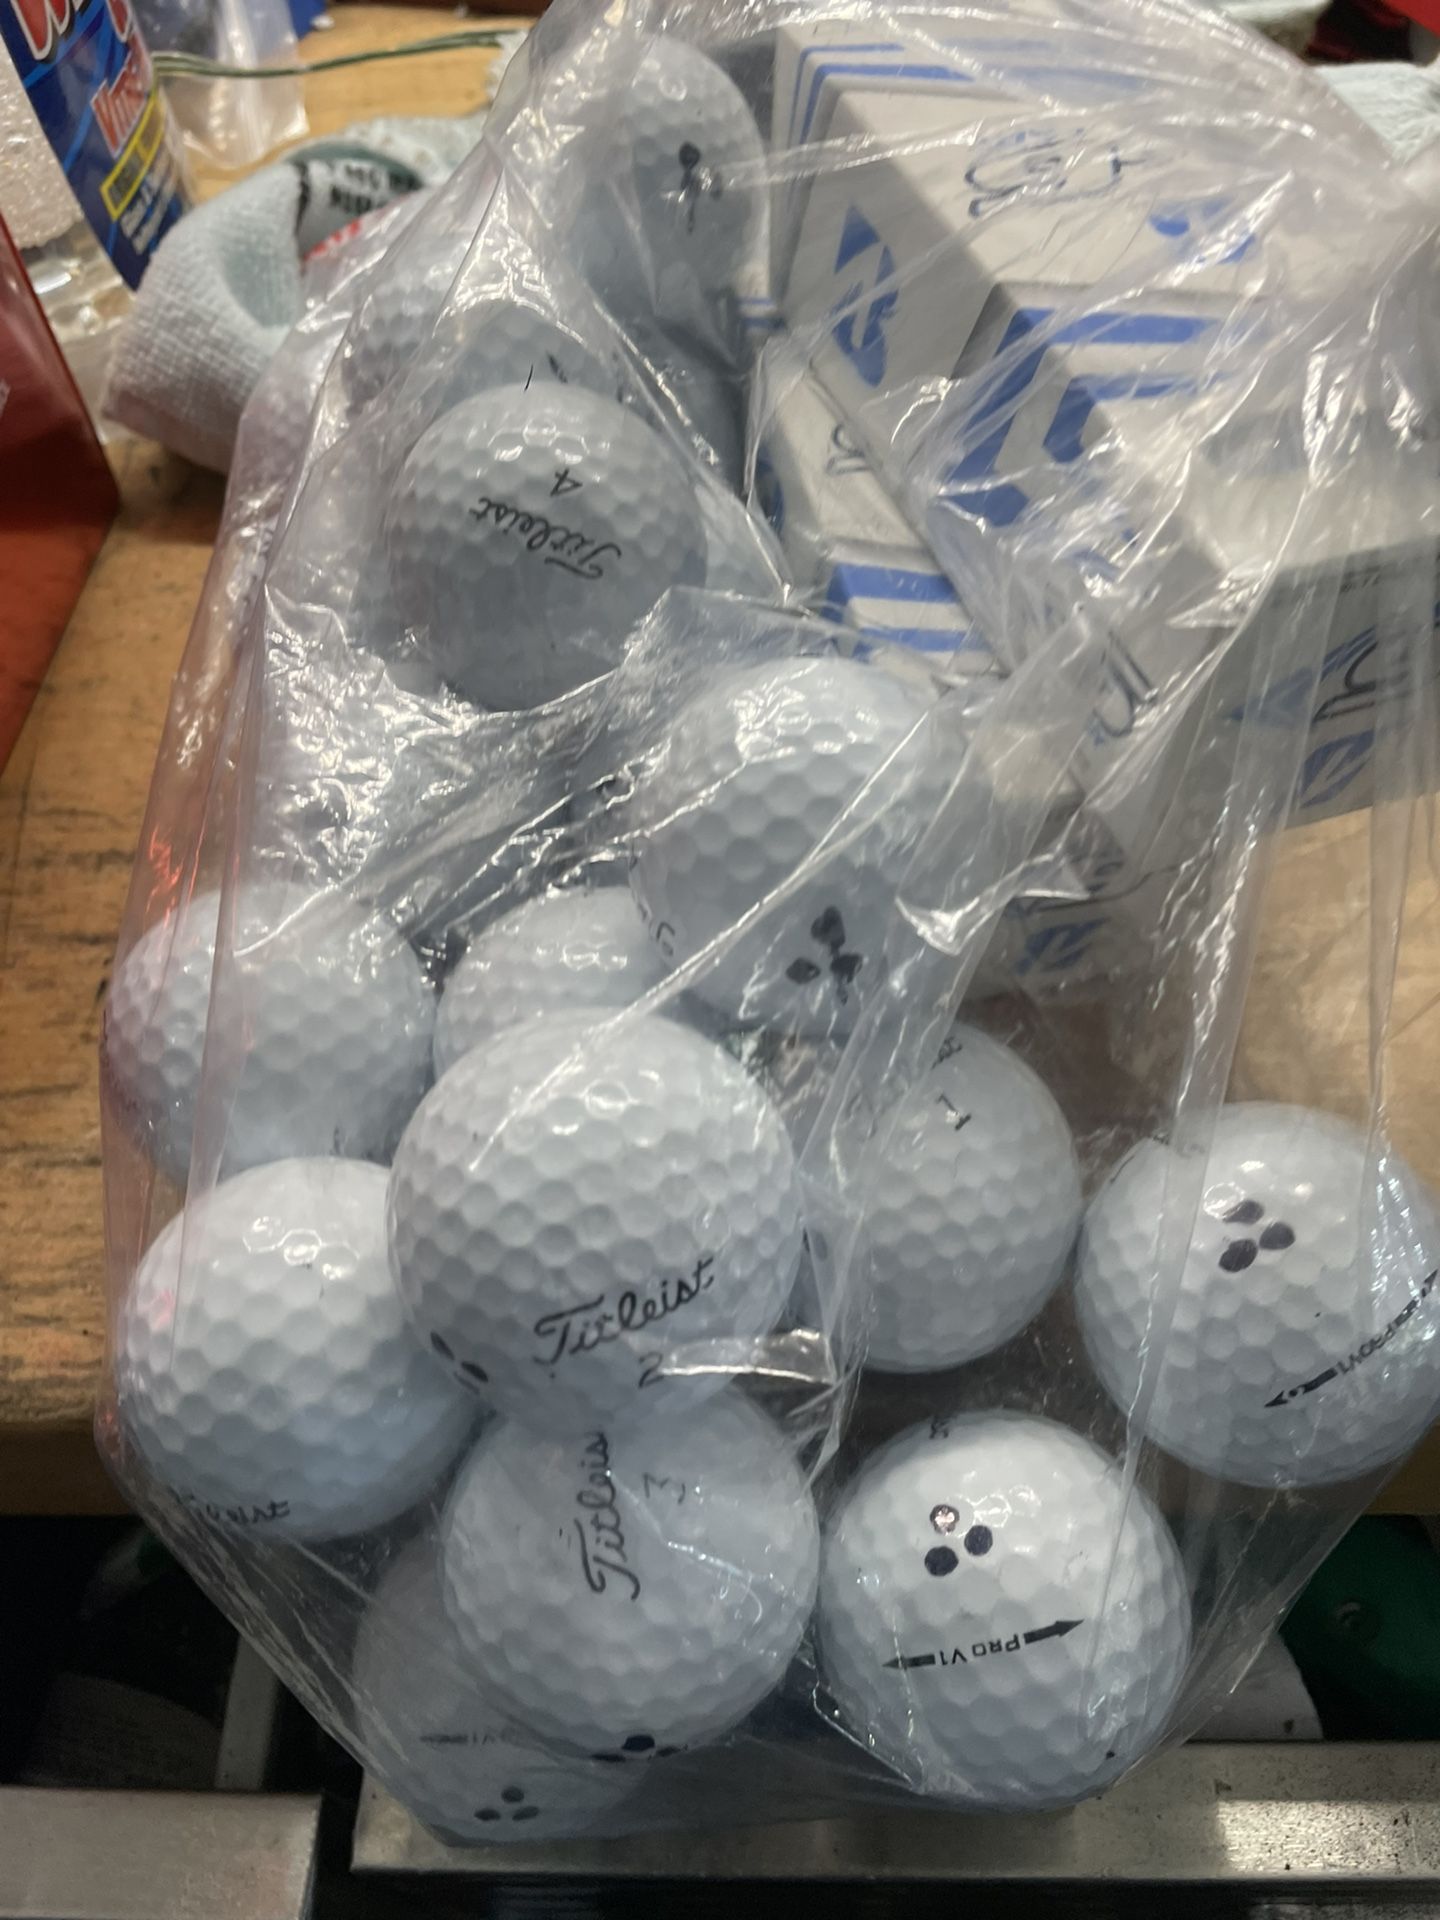 Golf balls and tees 